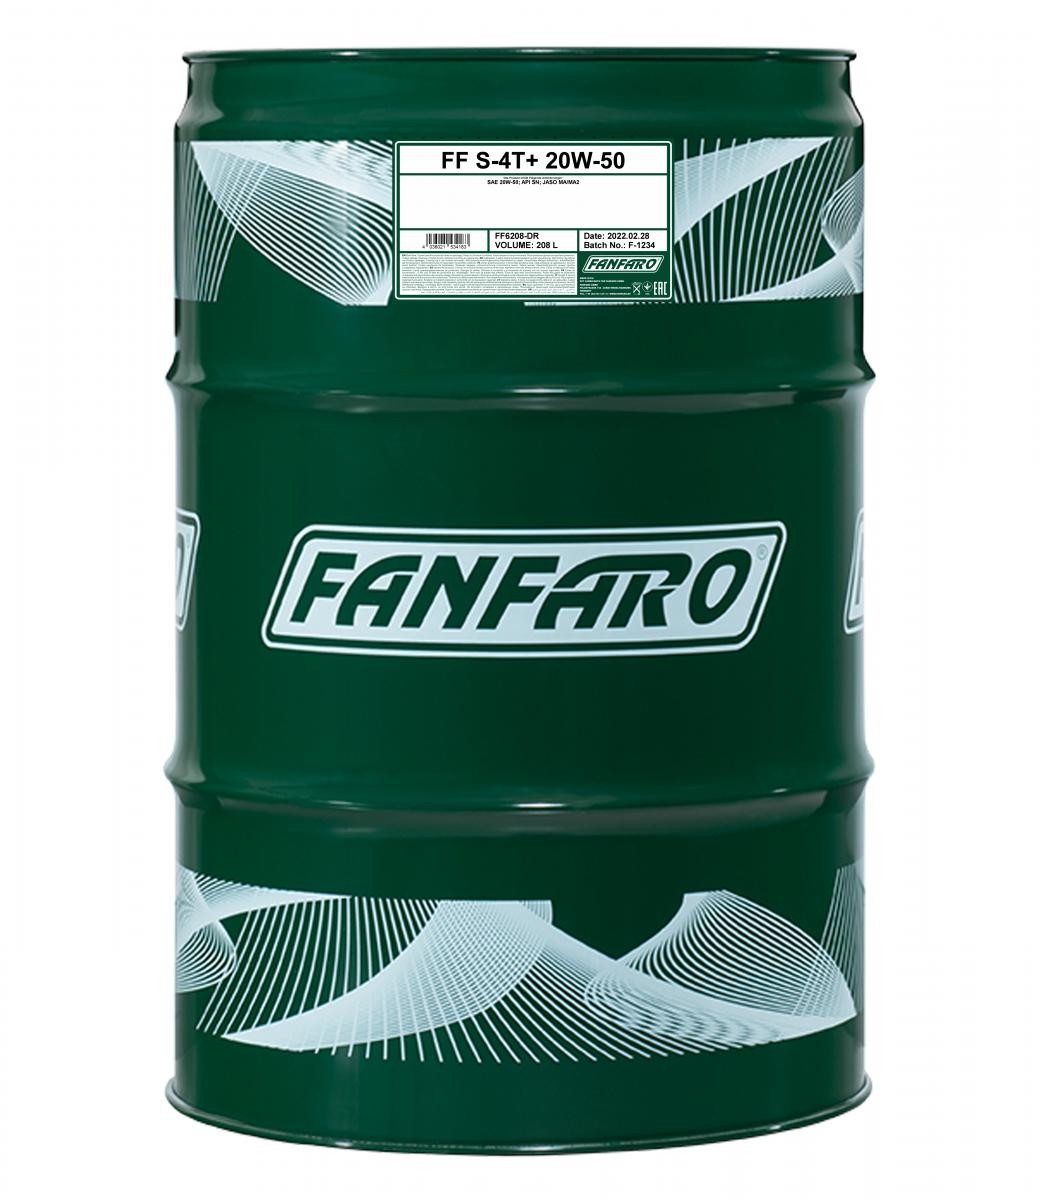 FF6208-DR FANFARO Oil HYUNDAI 20W-50, 208l, Synthetic Oil